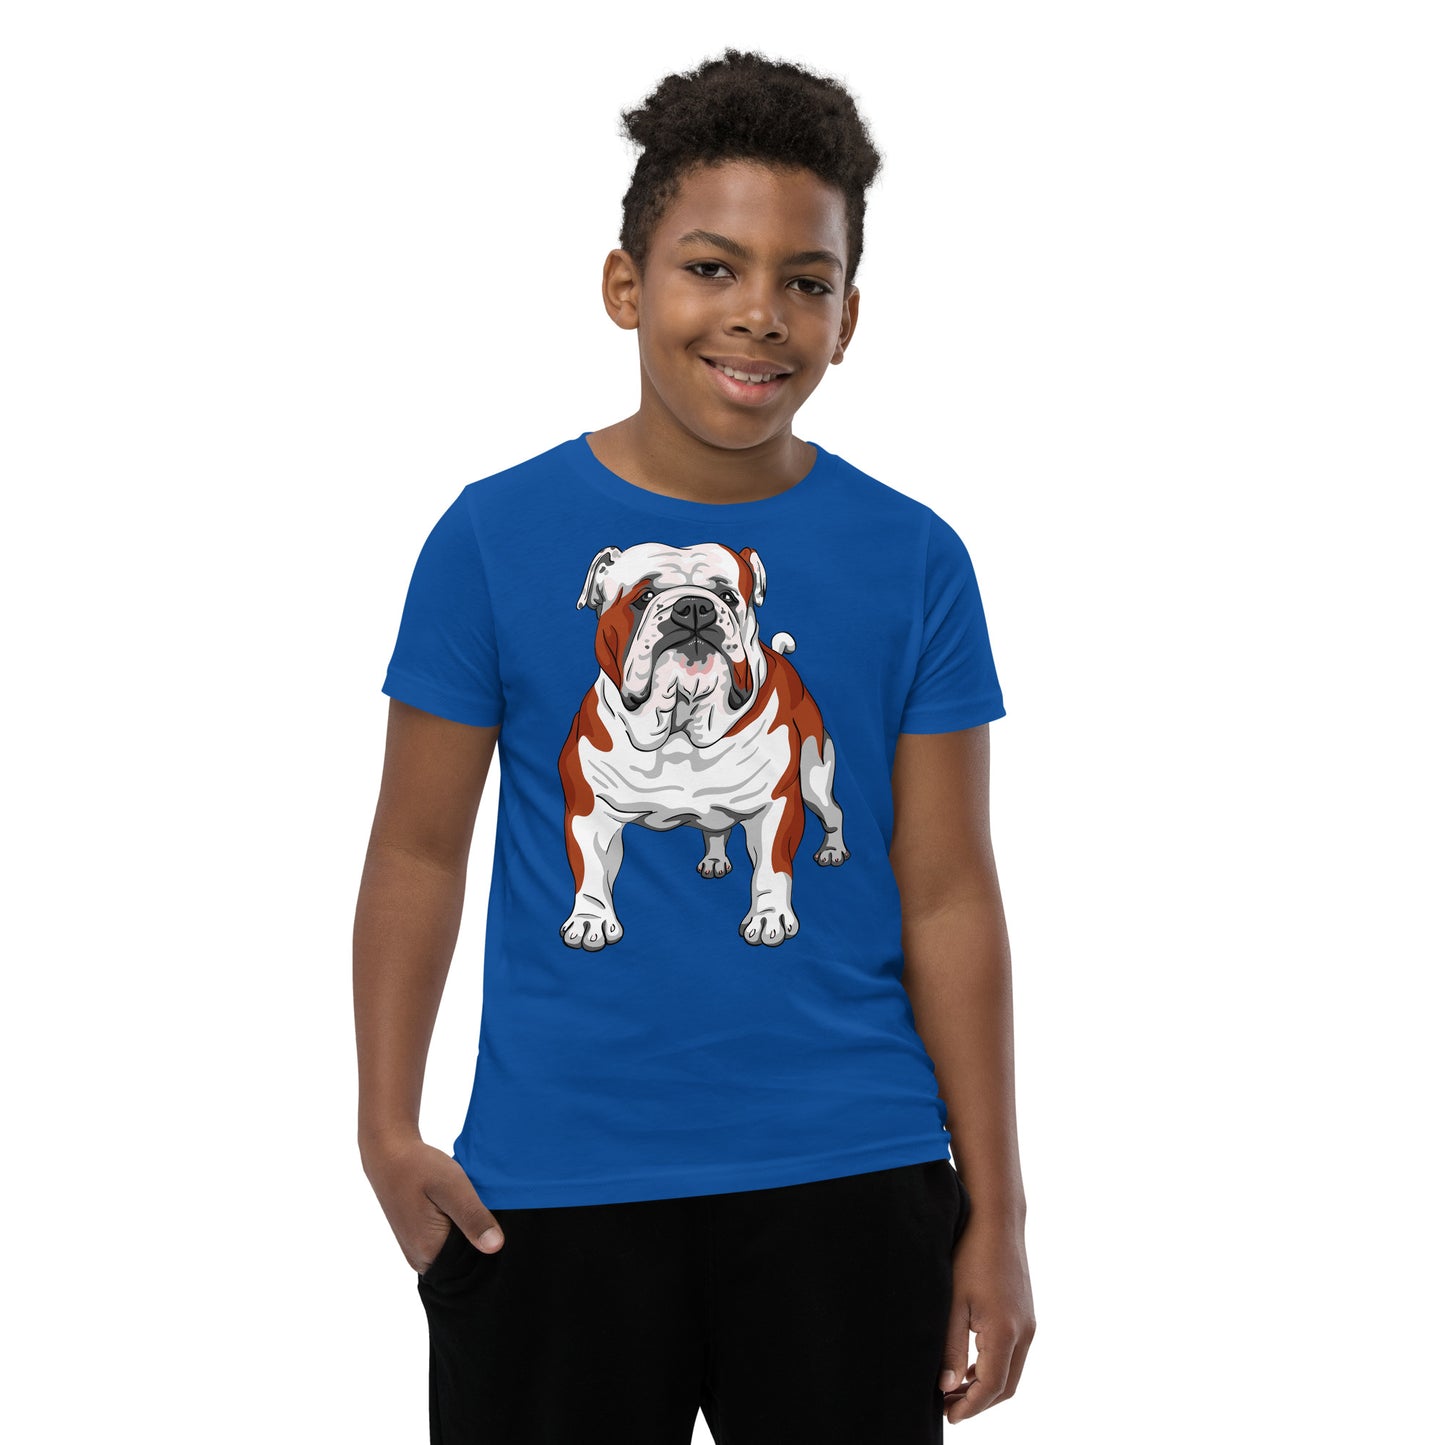 Cute English Bulldog Dog T-shirt, No. 0197